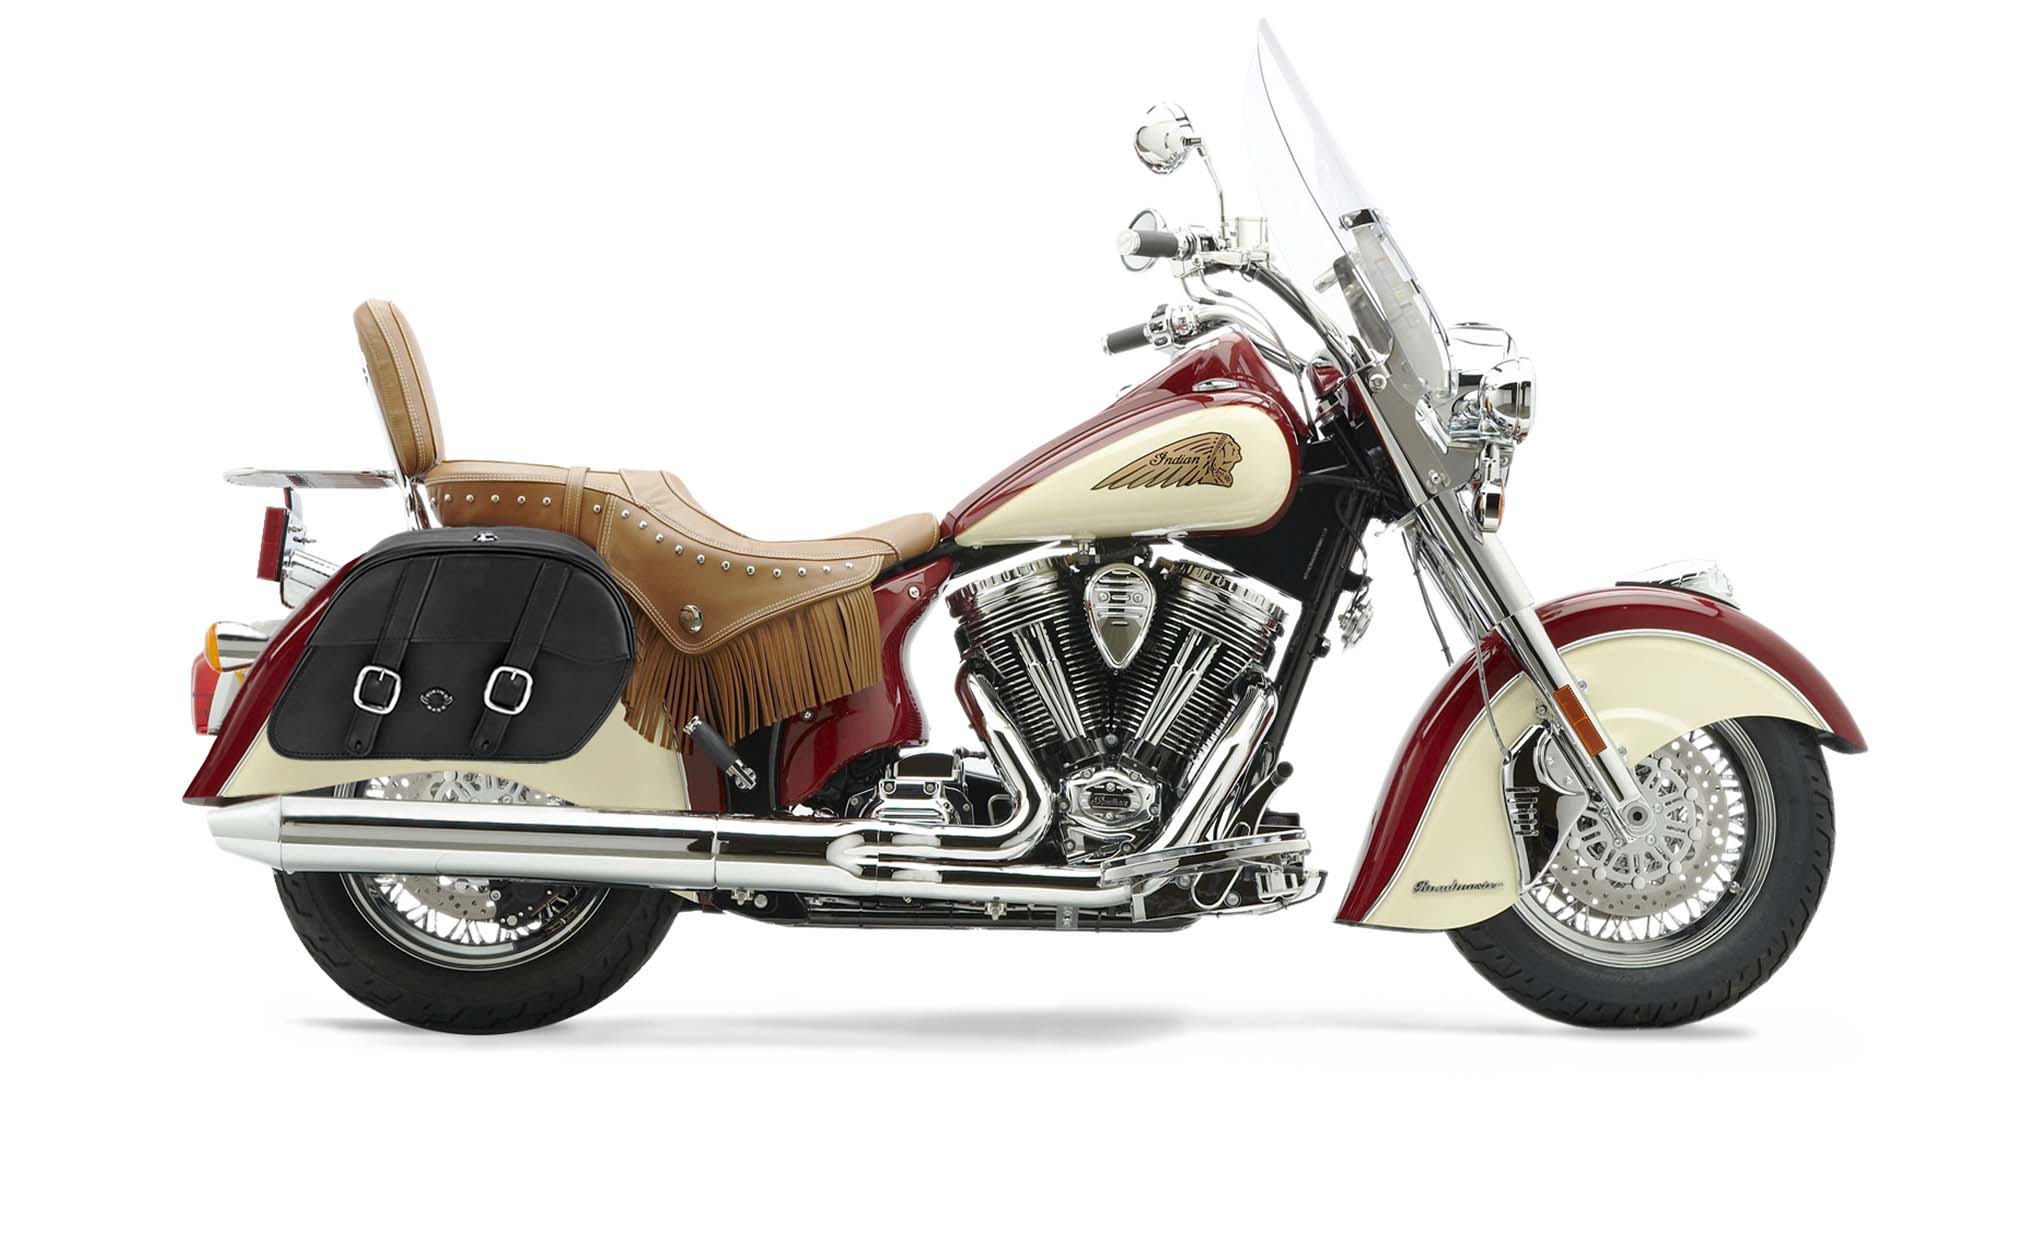 Viking Skarner Medium Lockable Indian Chief Roadmaster Leather Motorcycle Saddlebags on Bike Photo @expand